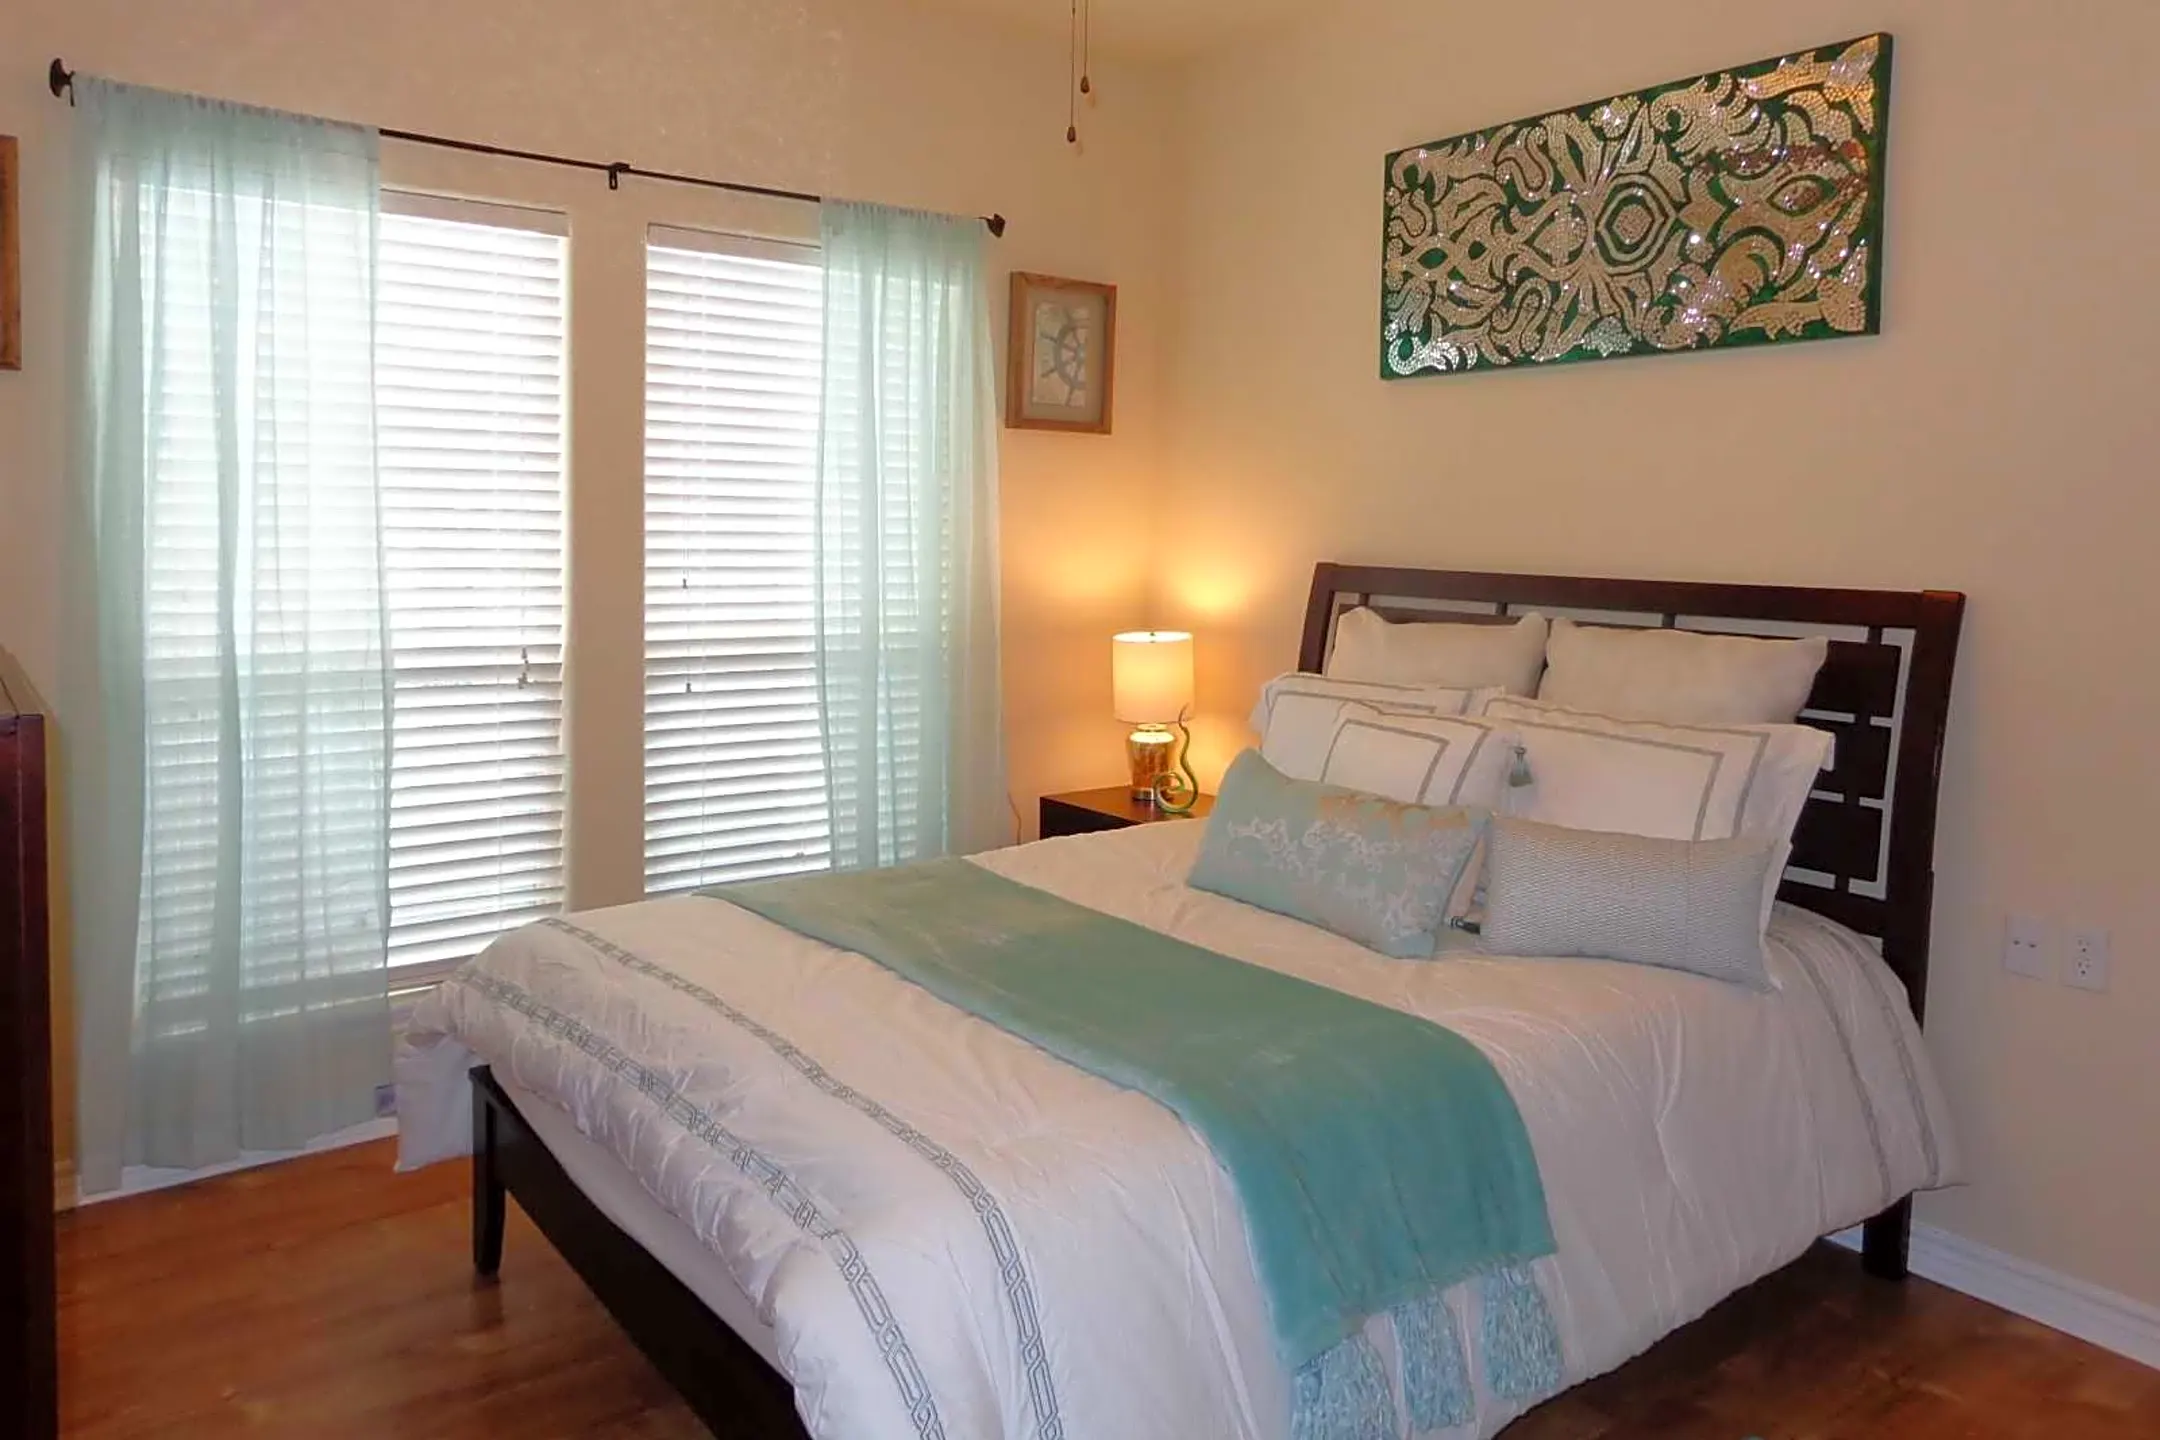 Bedroom - La Joya Bay Resort - Corpus Christi, TX